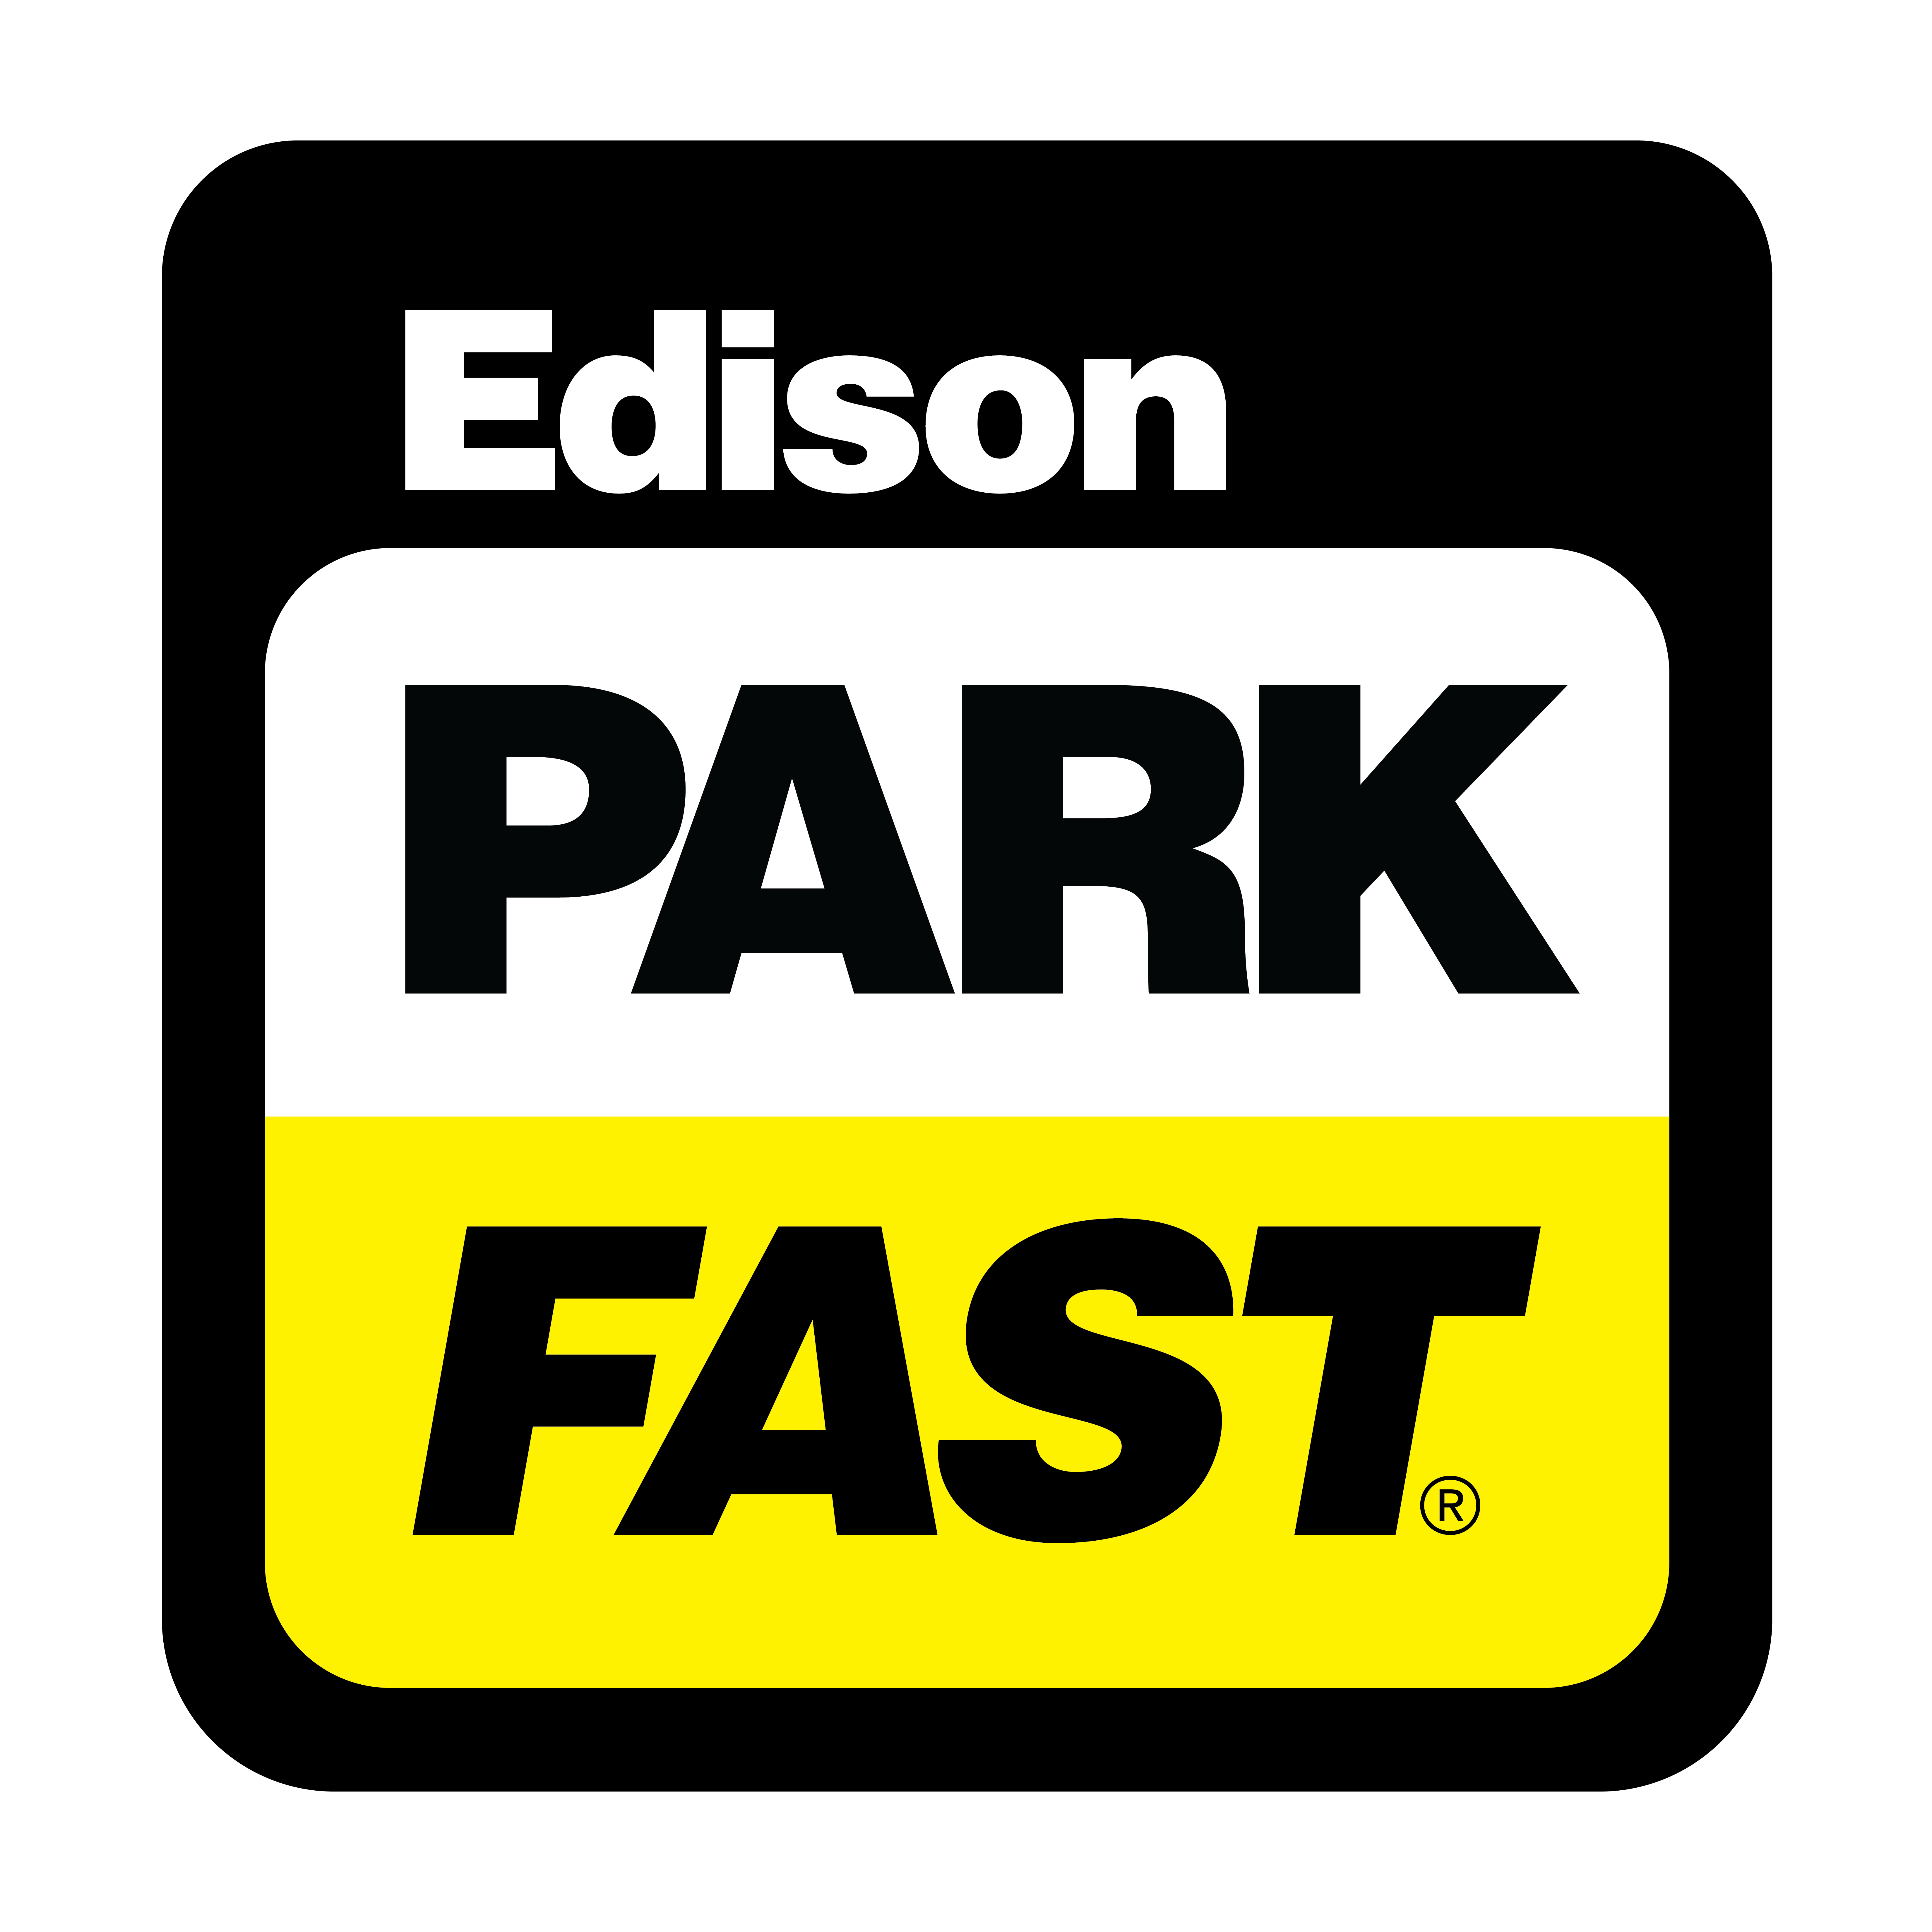 Edison ParkFast - New York, NY 10013 - (888)727-5327 | ShowMeLocal.com